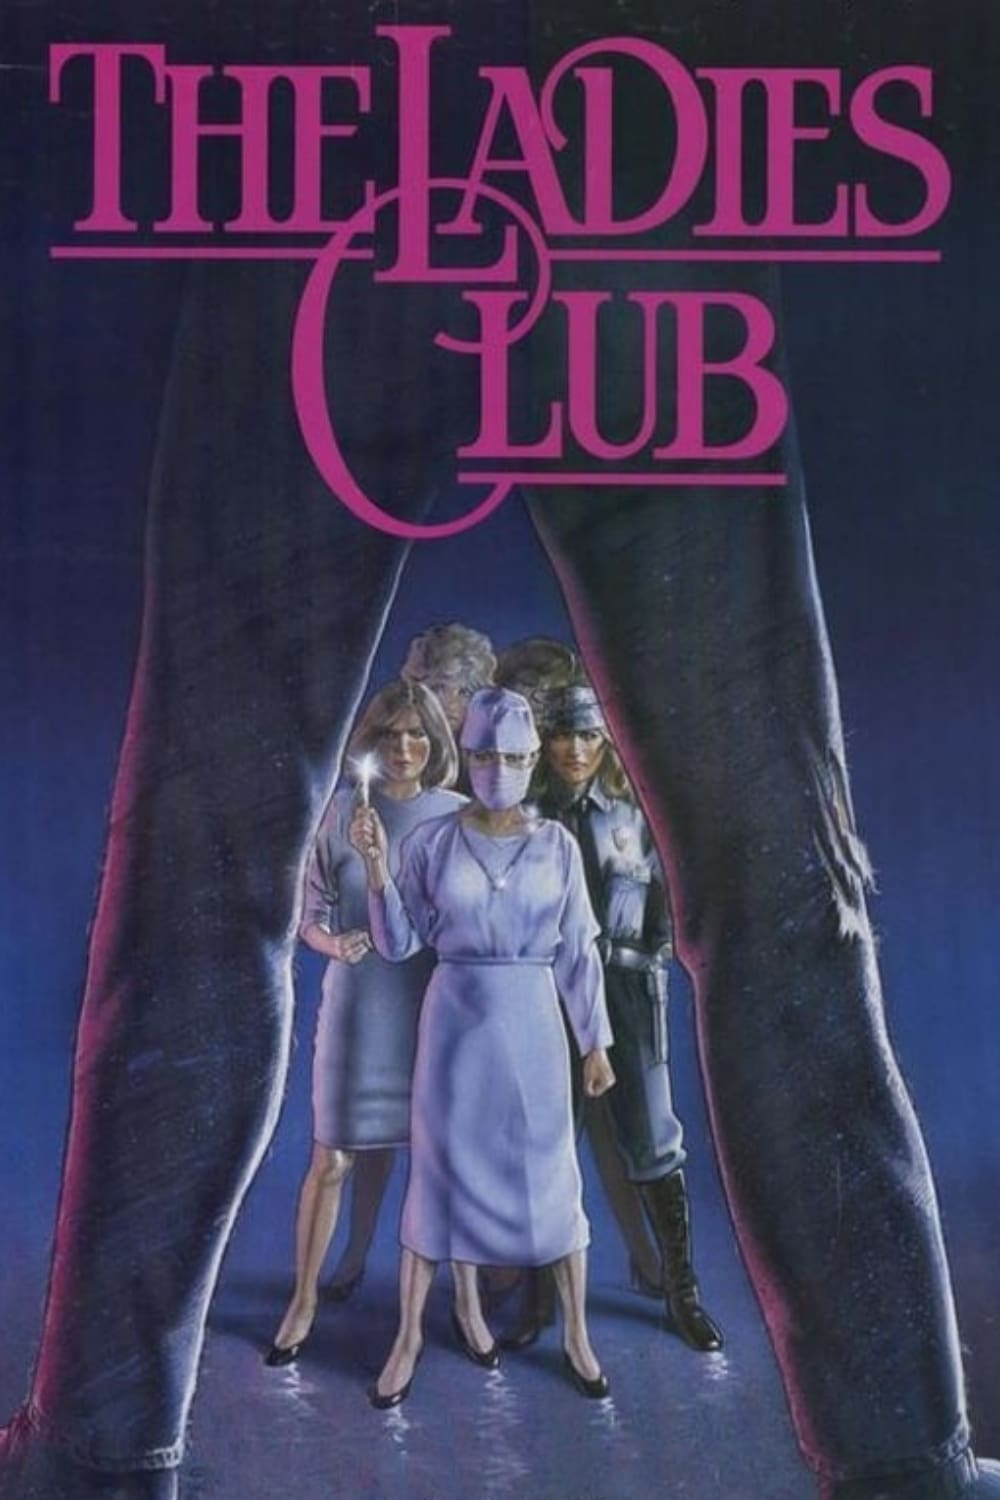 The Ladies Club (1986)